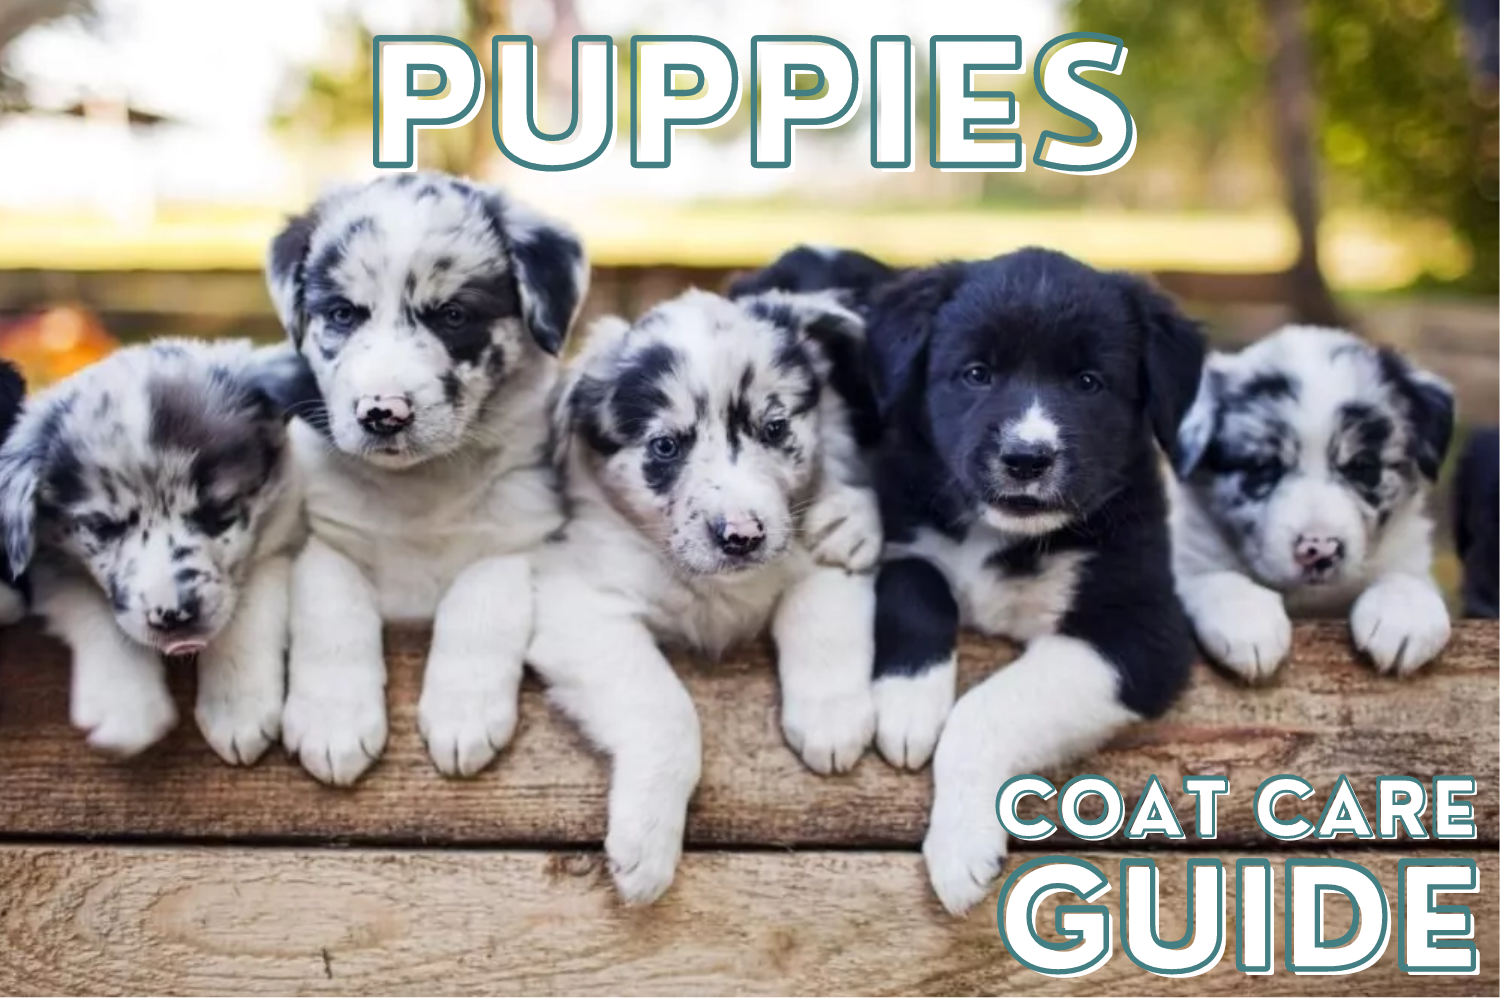 Puppies Coat Care Guide